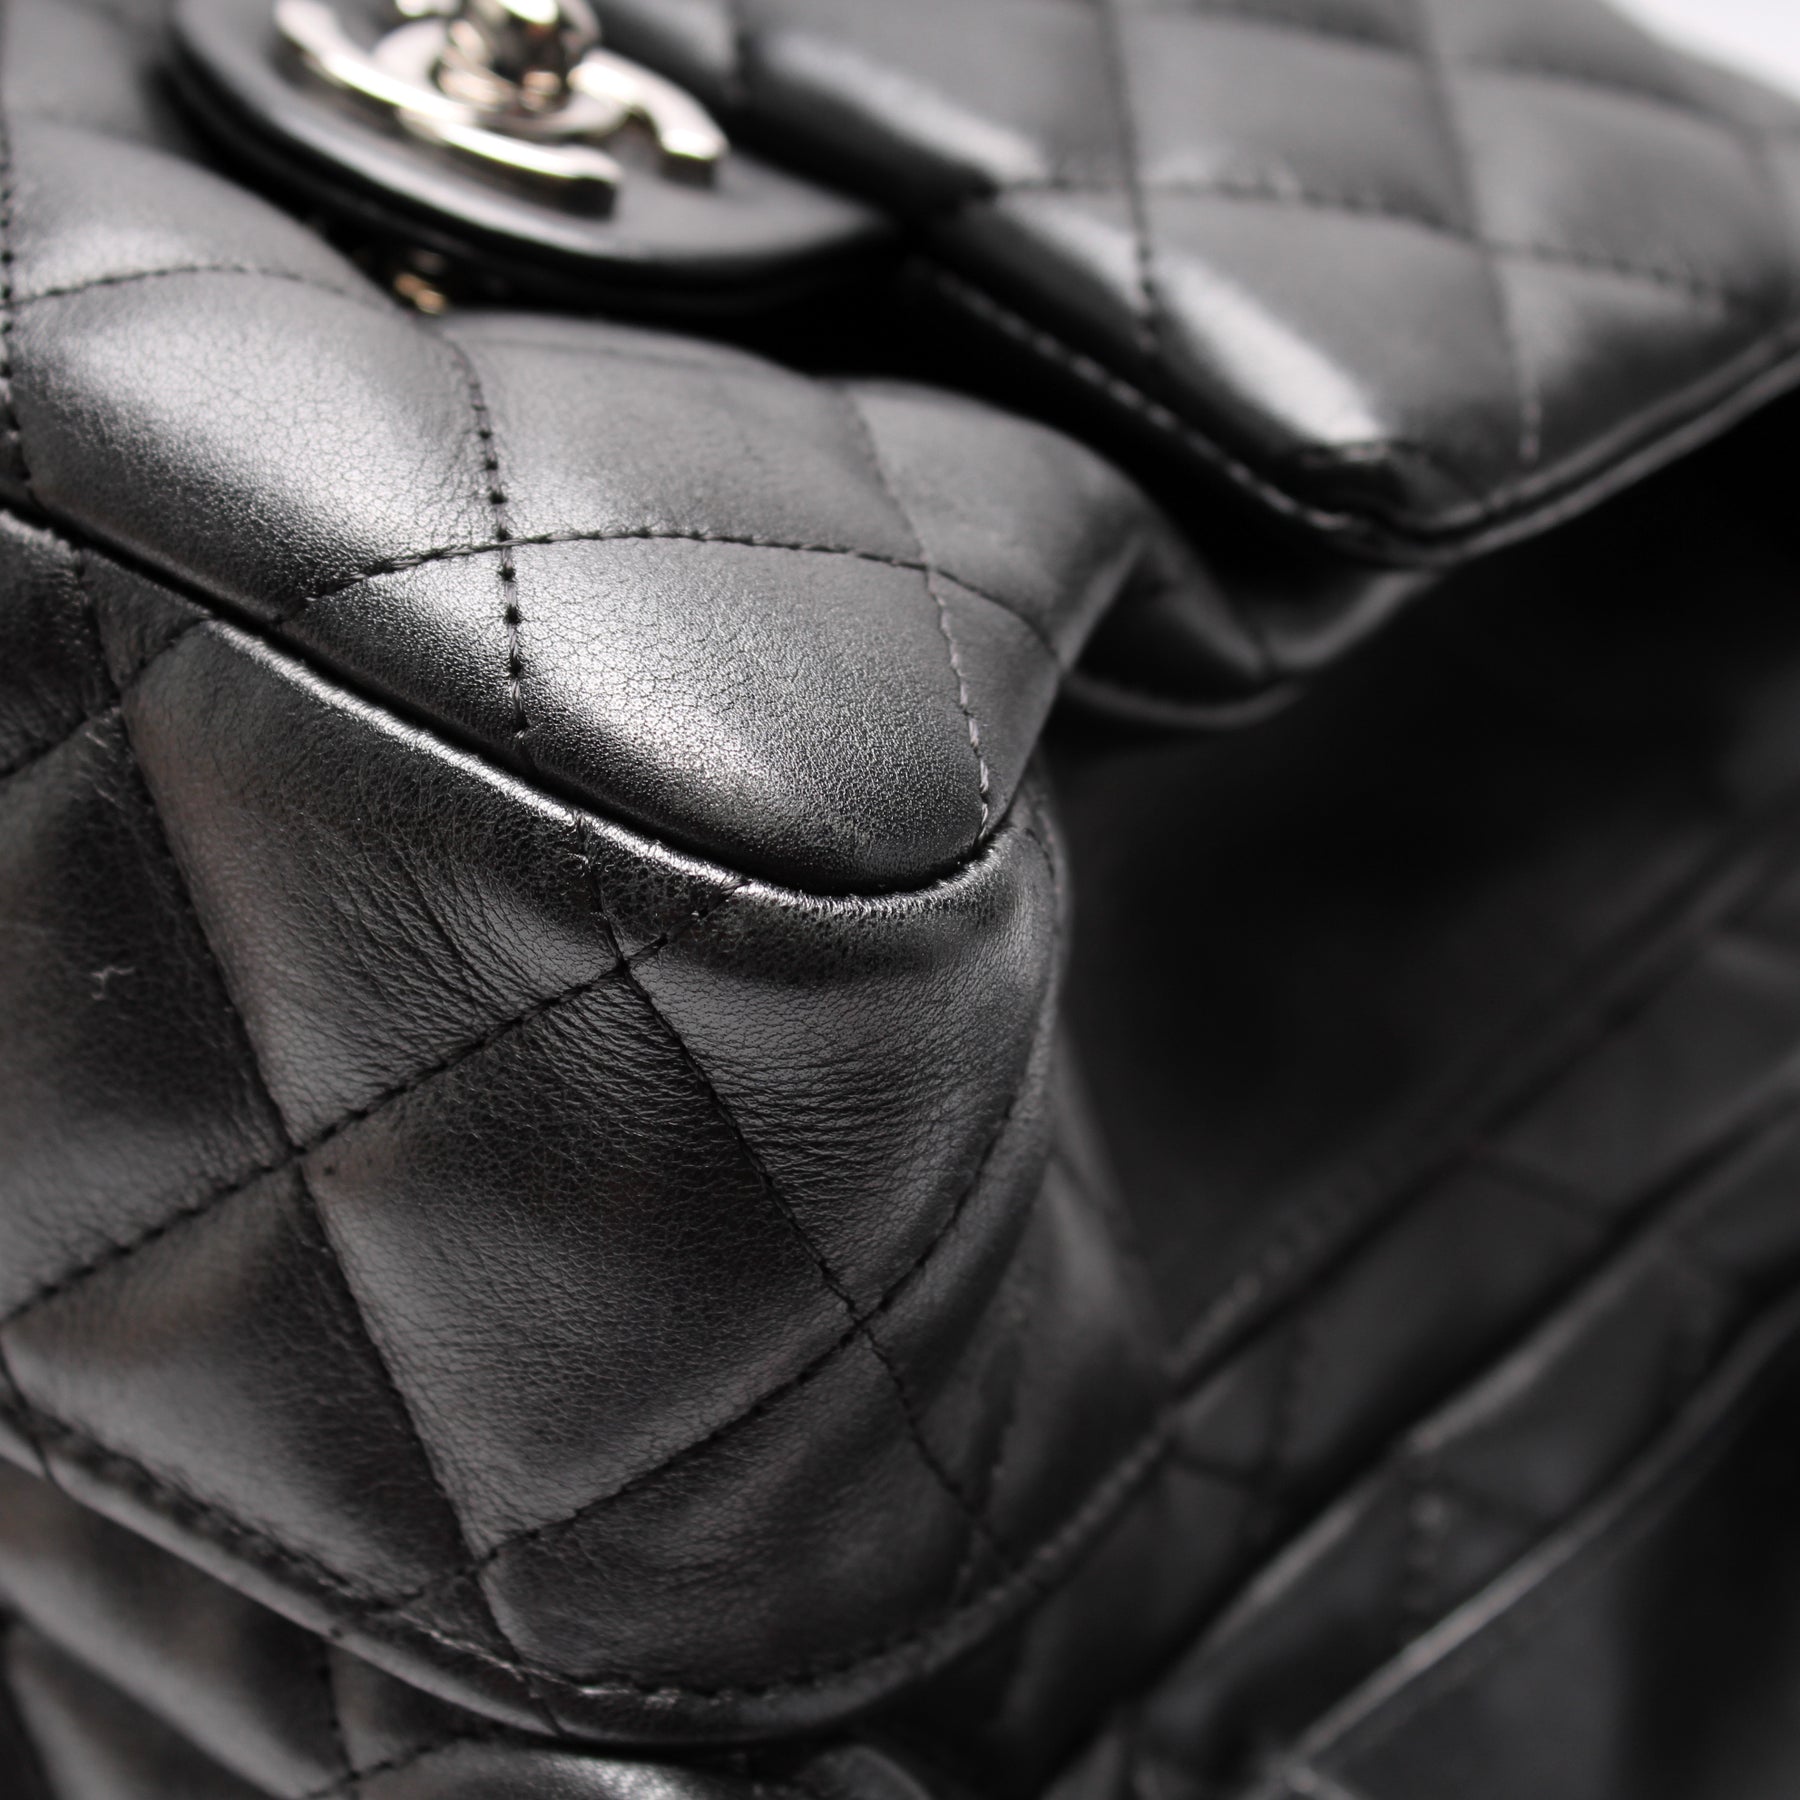 Cambon Large Multipocket Reporter – Keeks Designer Handbags